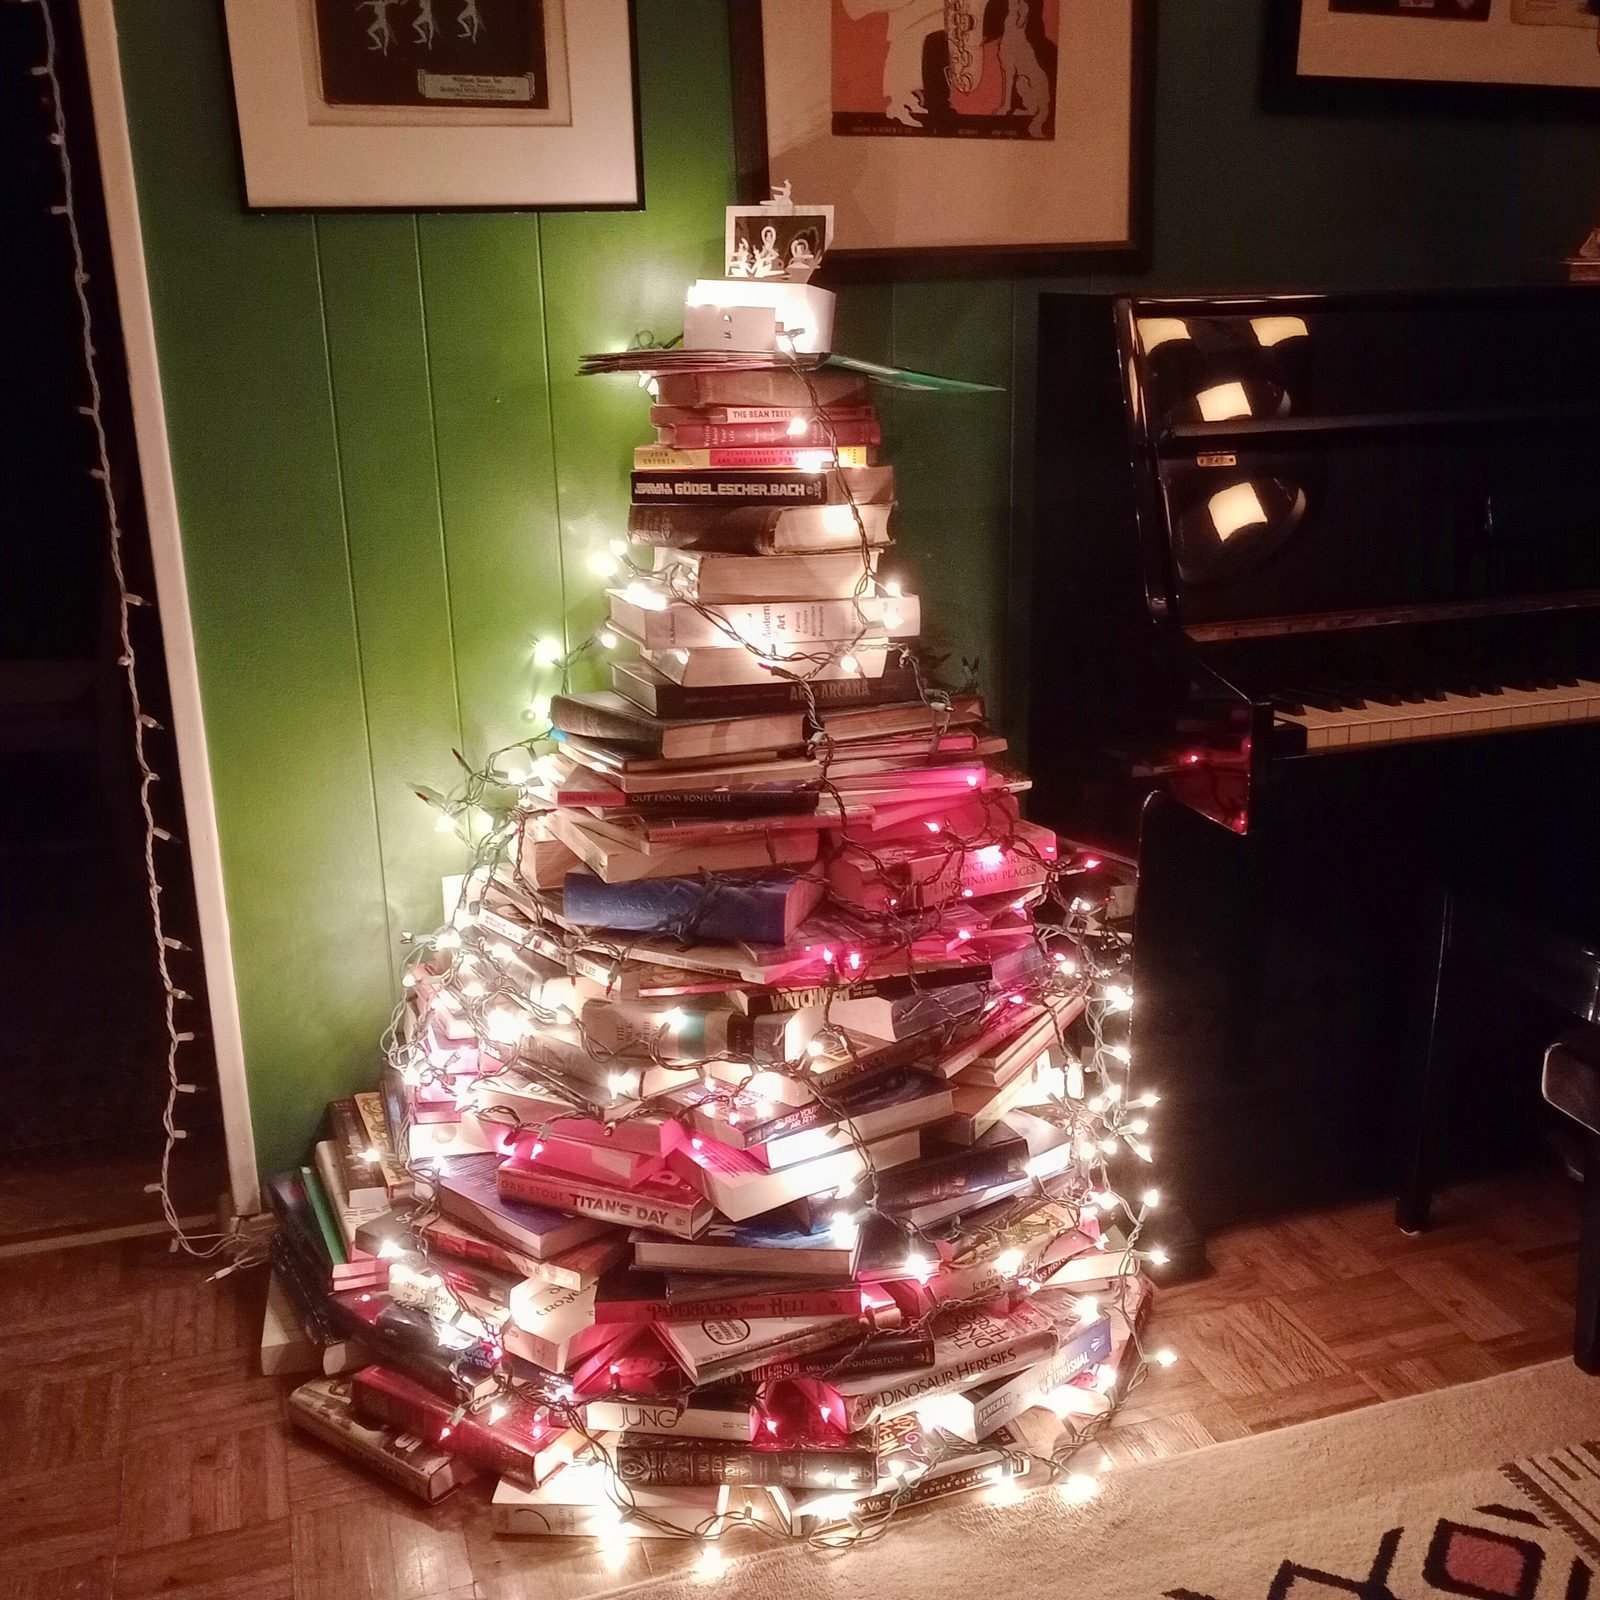 How To Make a Book Christmas Tree